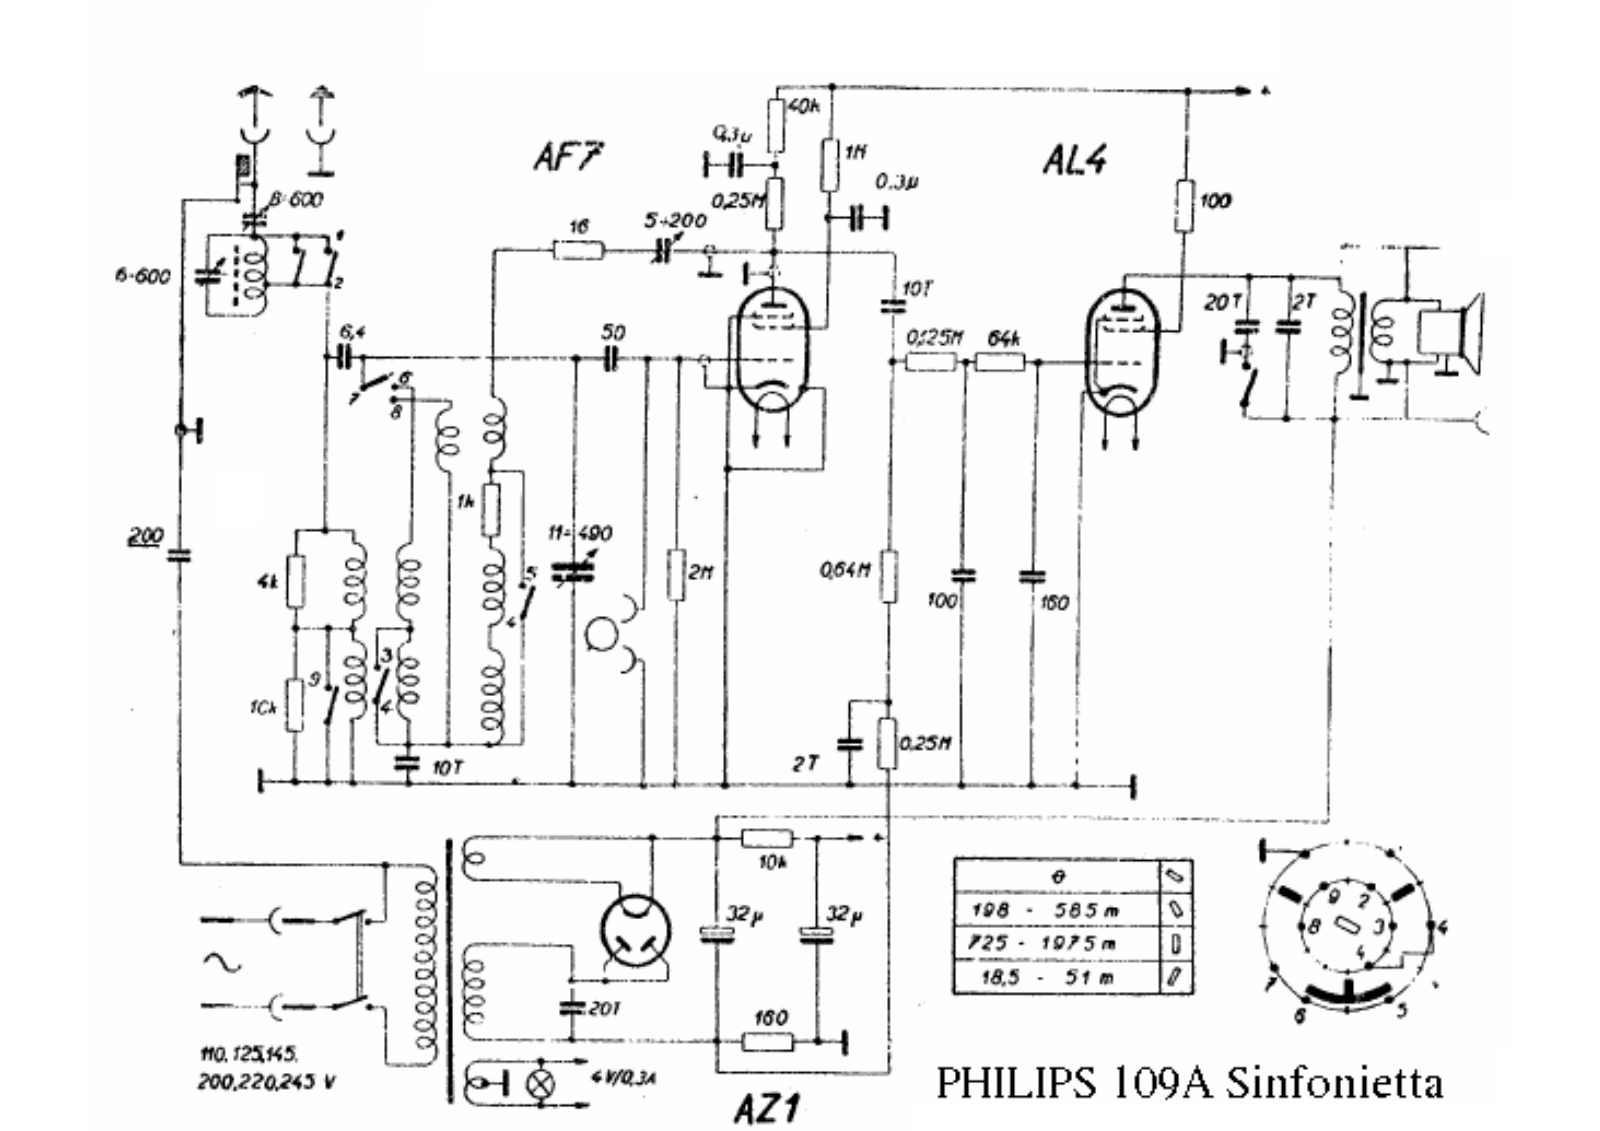 Philips 109a schematic